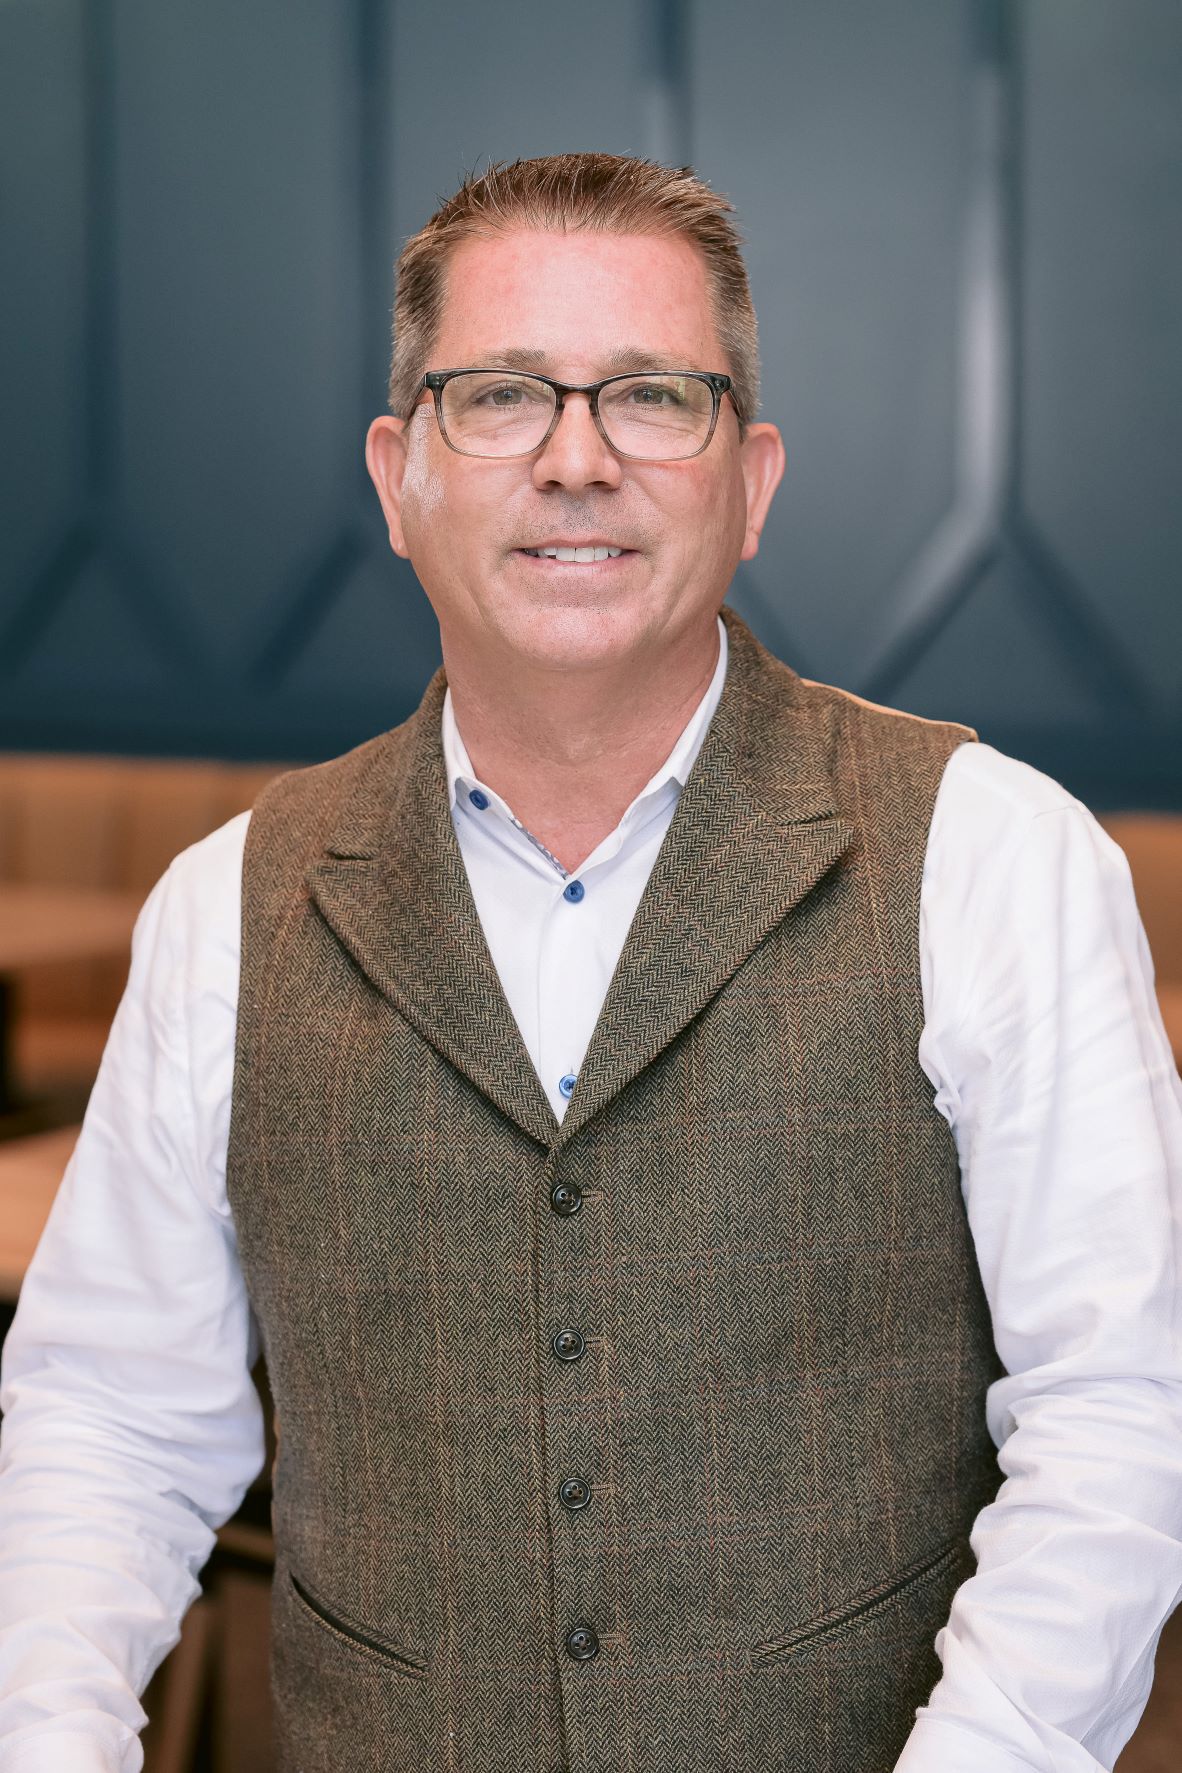 Todd Shepard – Vice President, Restaurants